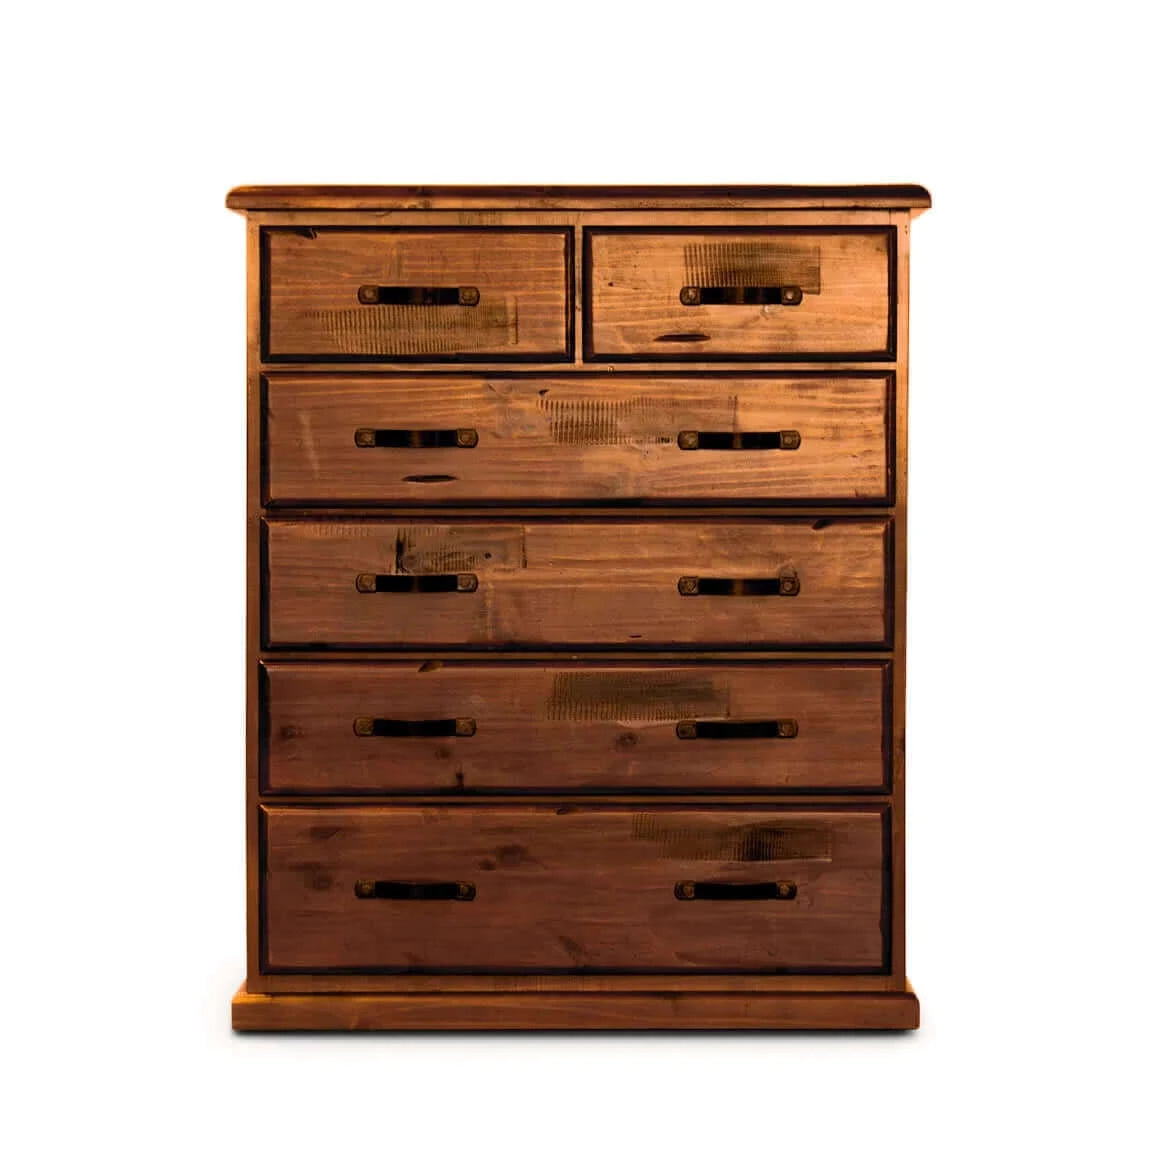 Umber Tallboy Pine Chest - 6 Drawers Storage Cabinet-Upinteriors